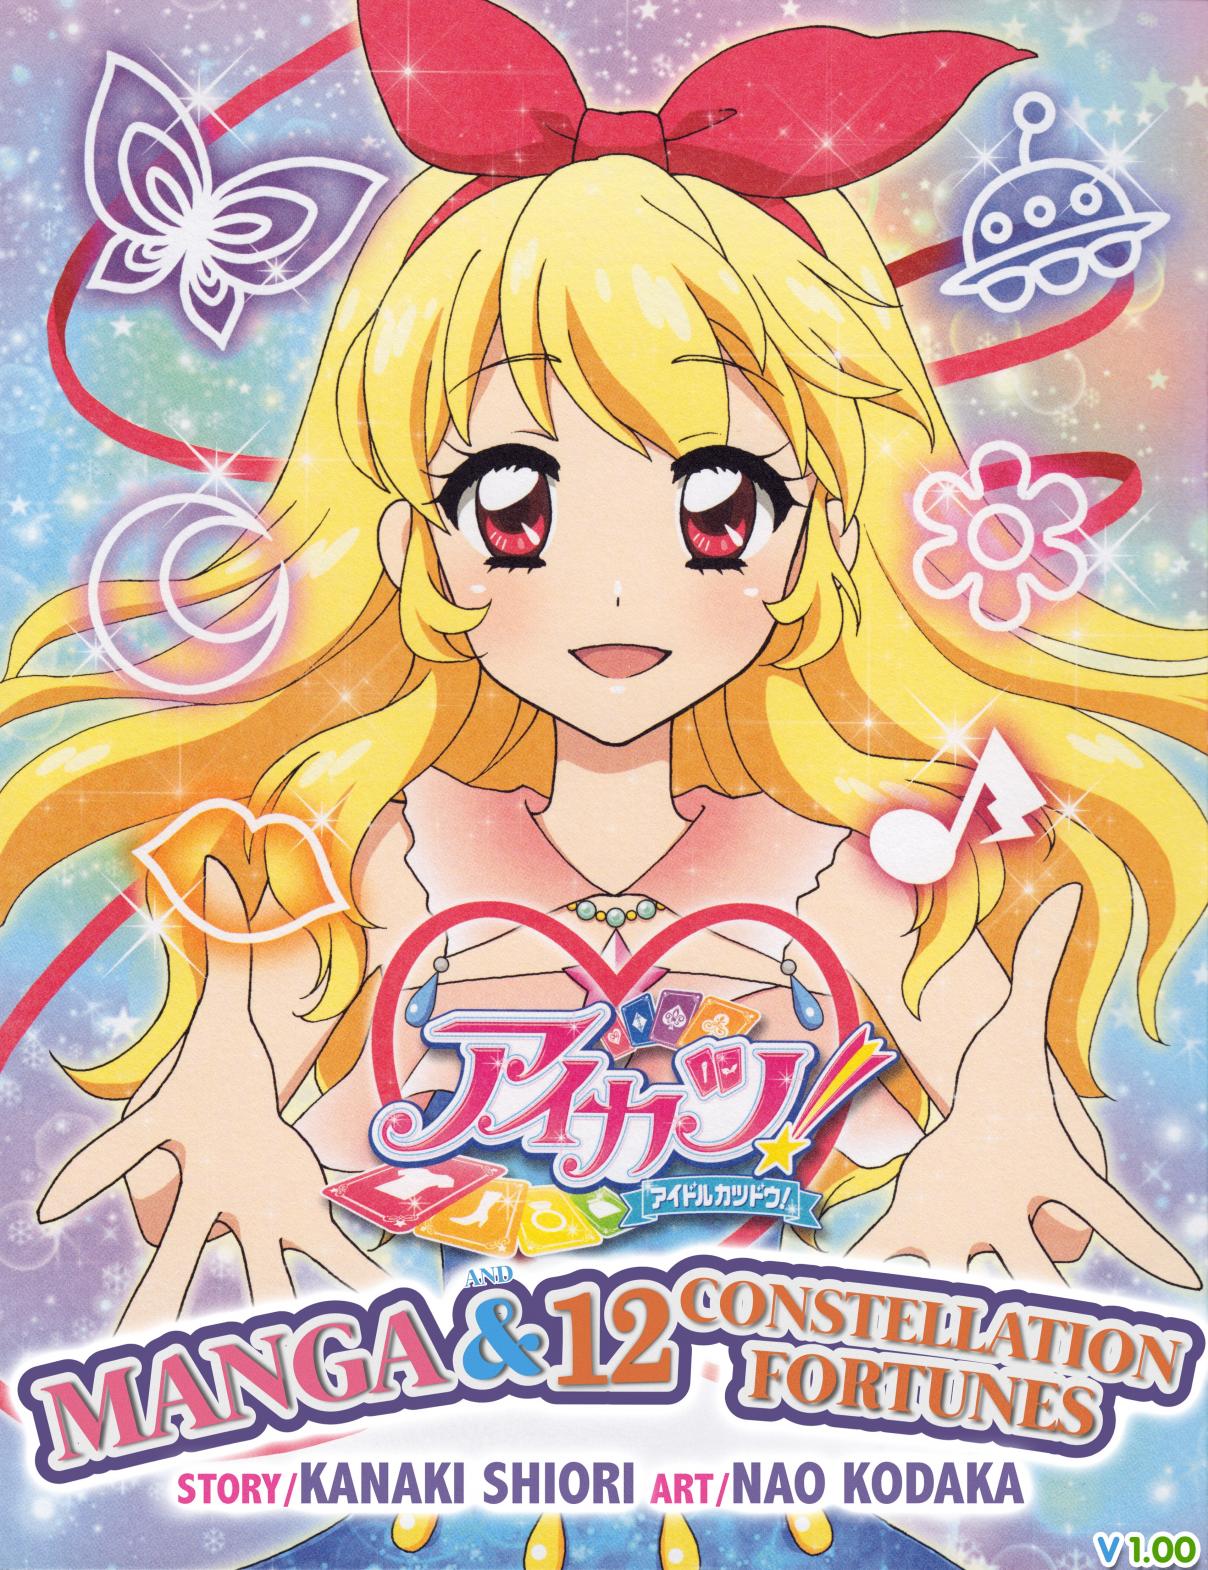 Aikatsu! Manga & 12 Seiza Uranai Ch. 2 Producer Kii Becomes an Idol